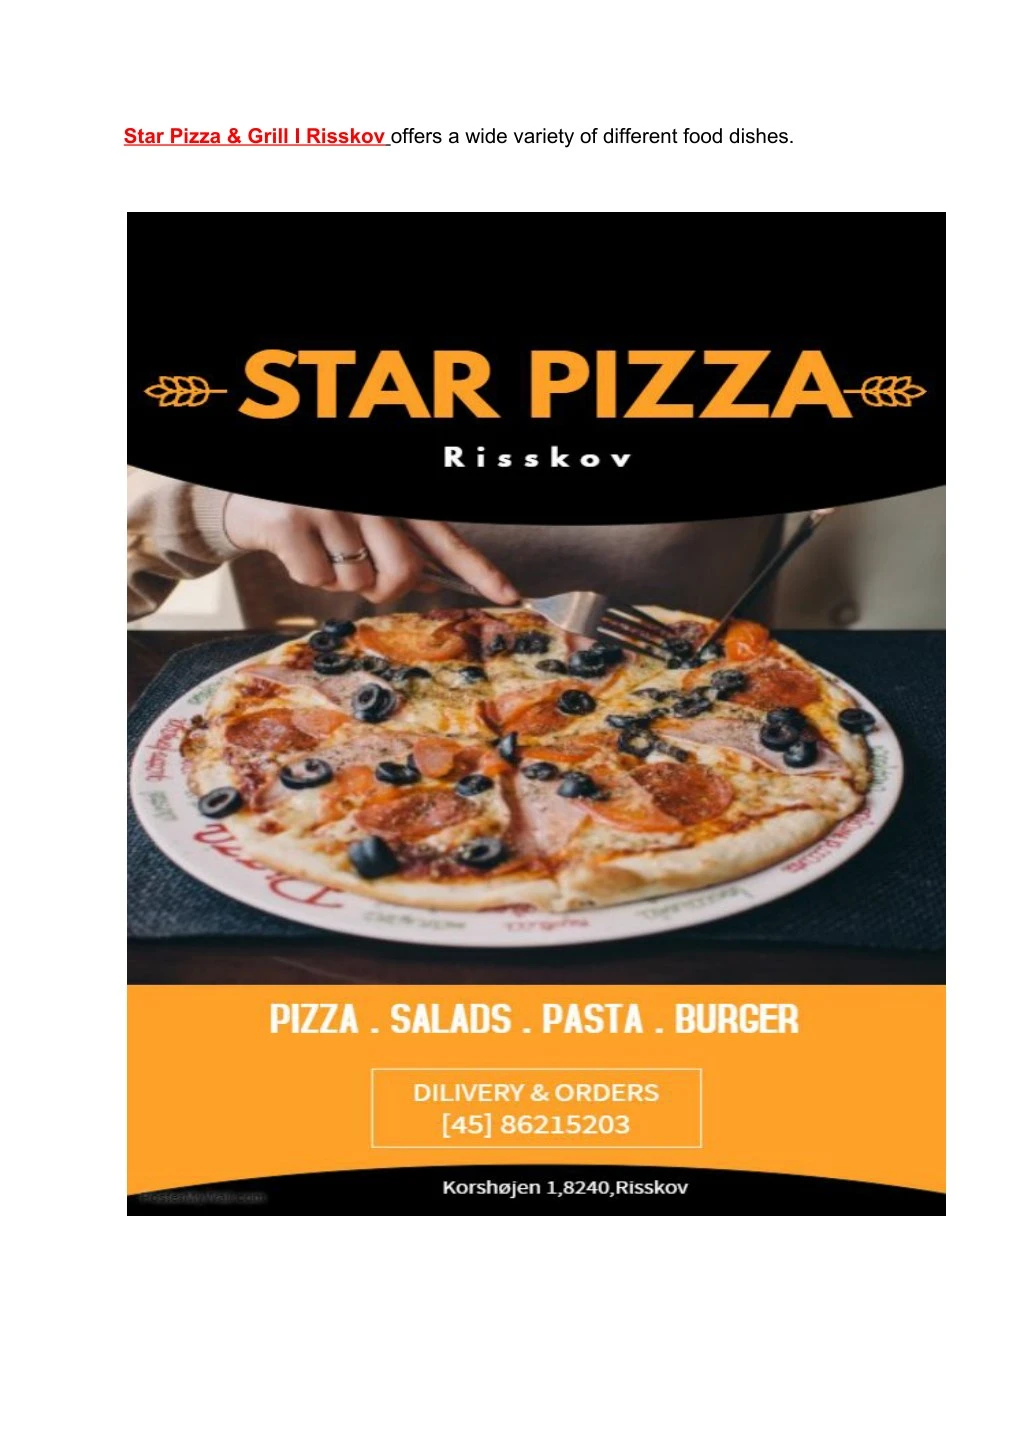 star pizza grill i risskov offers a wide variety